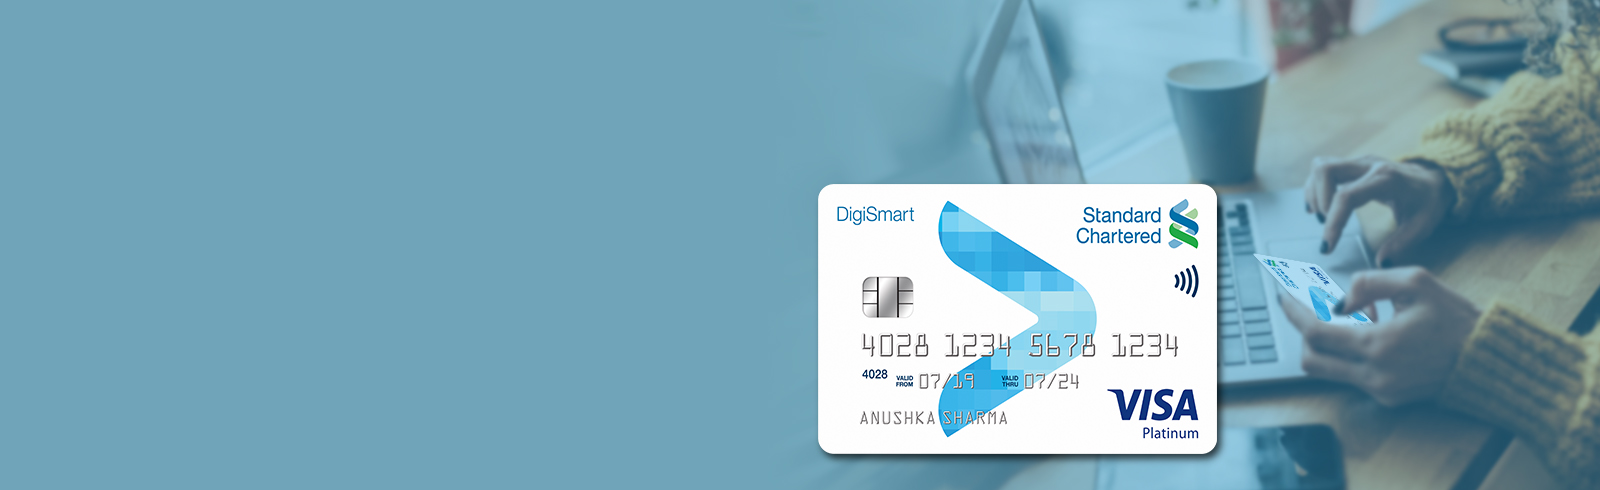 digi smart credit card